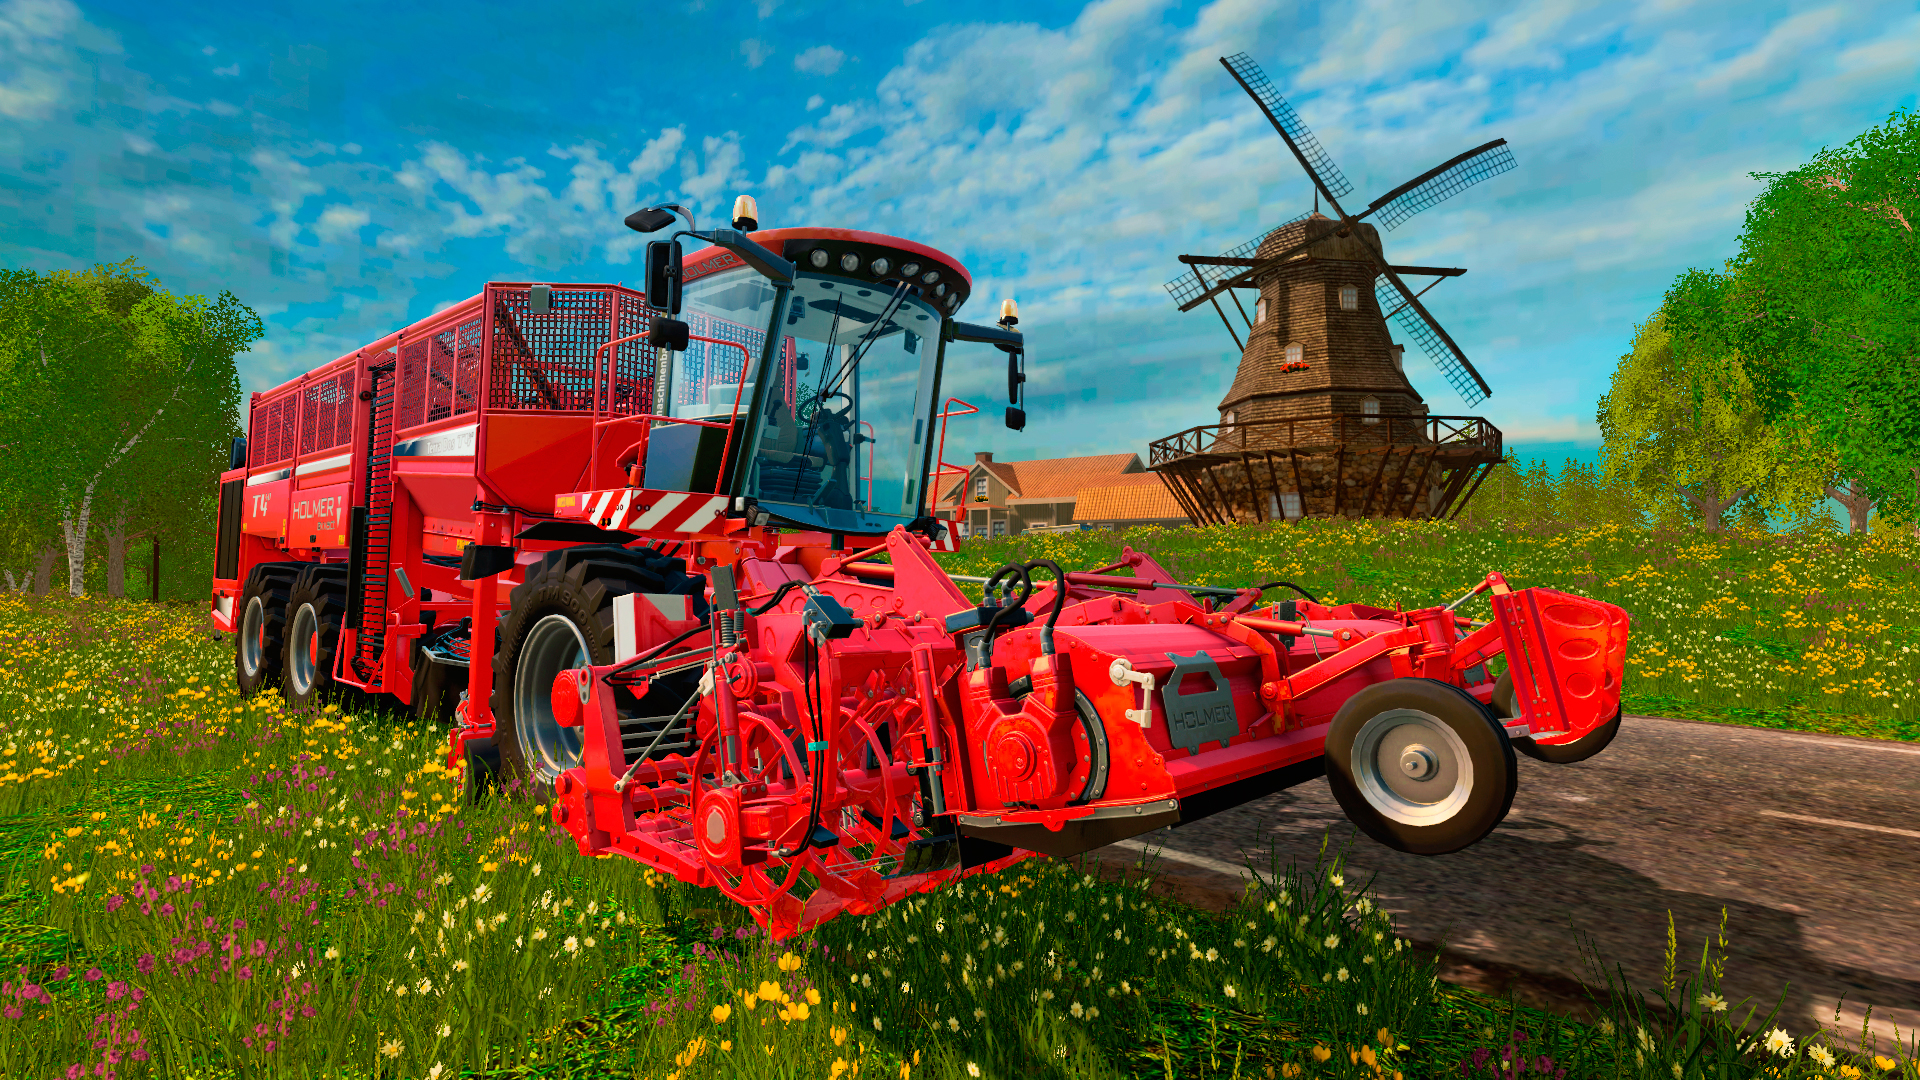 Farming Simulator 15 Holmer Version Full Game Free Download